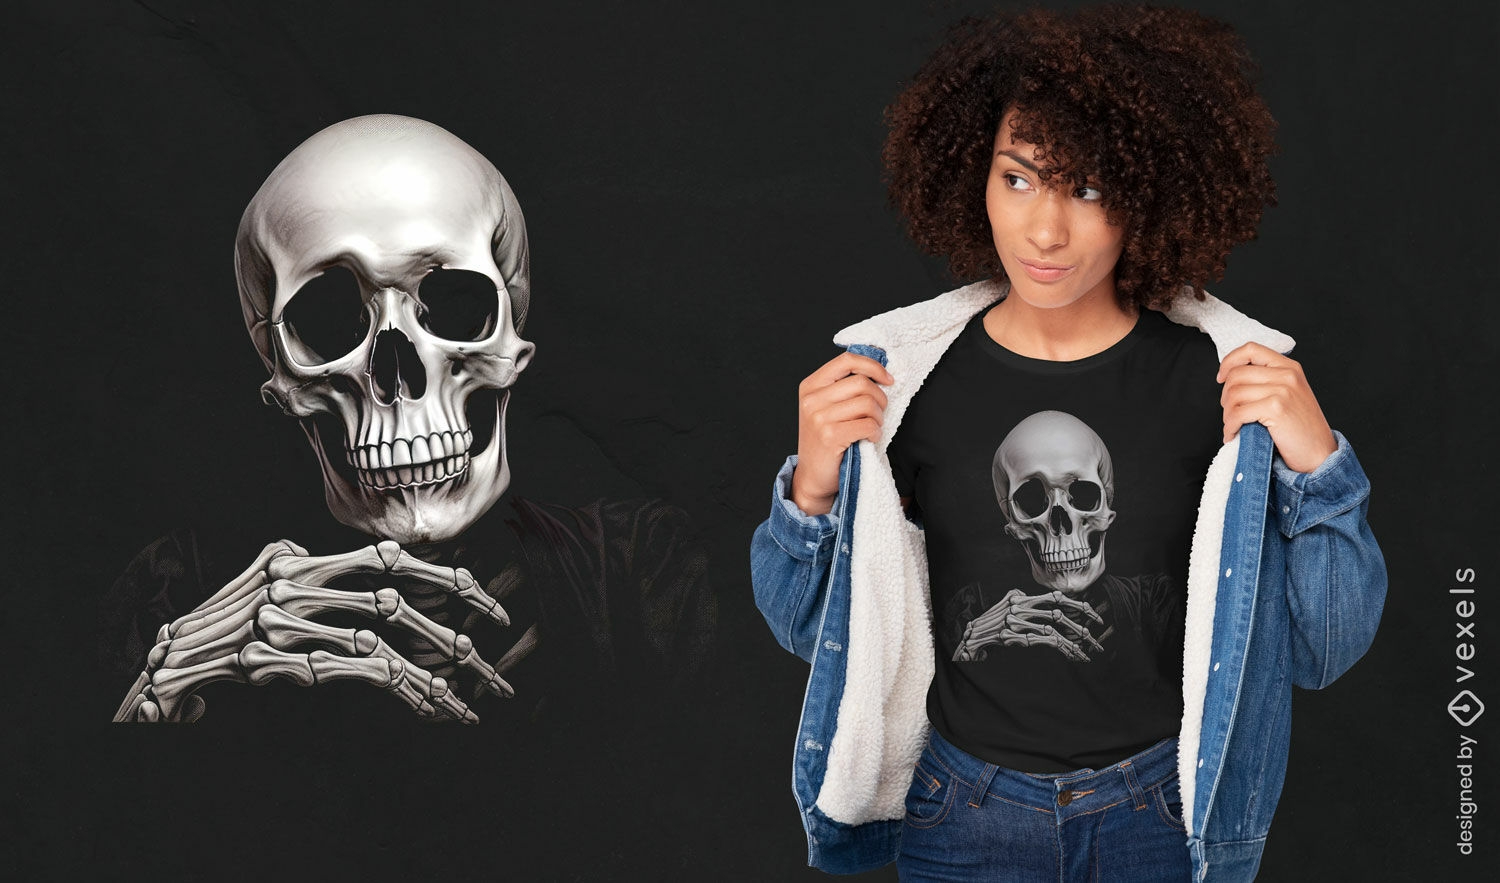 Skeleton character thinking t-shirt design